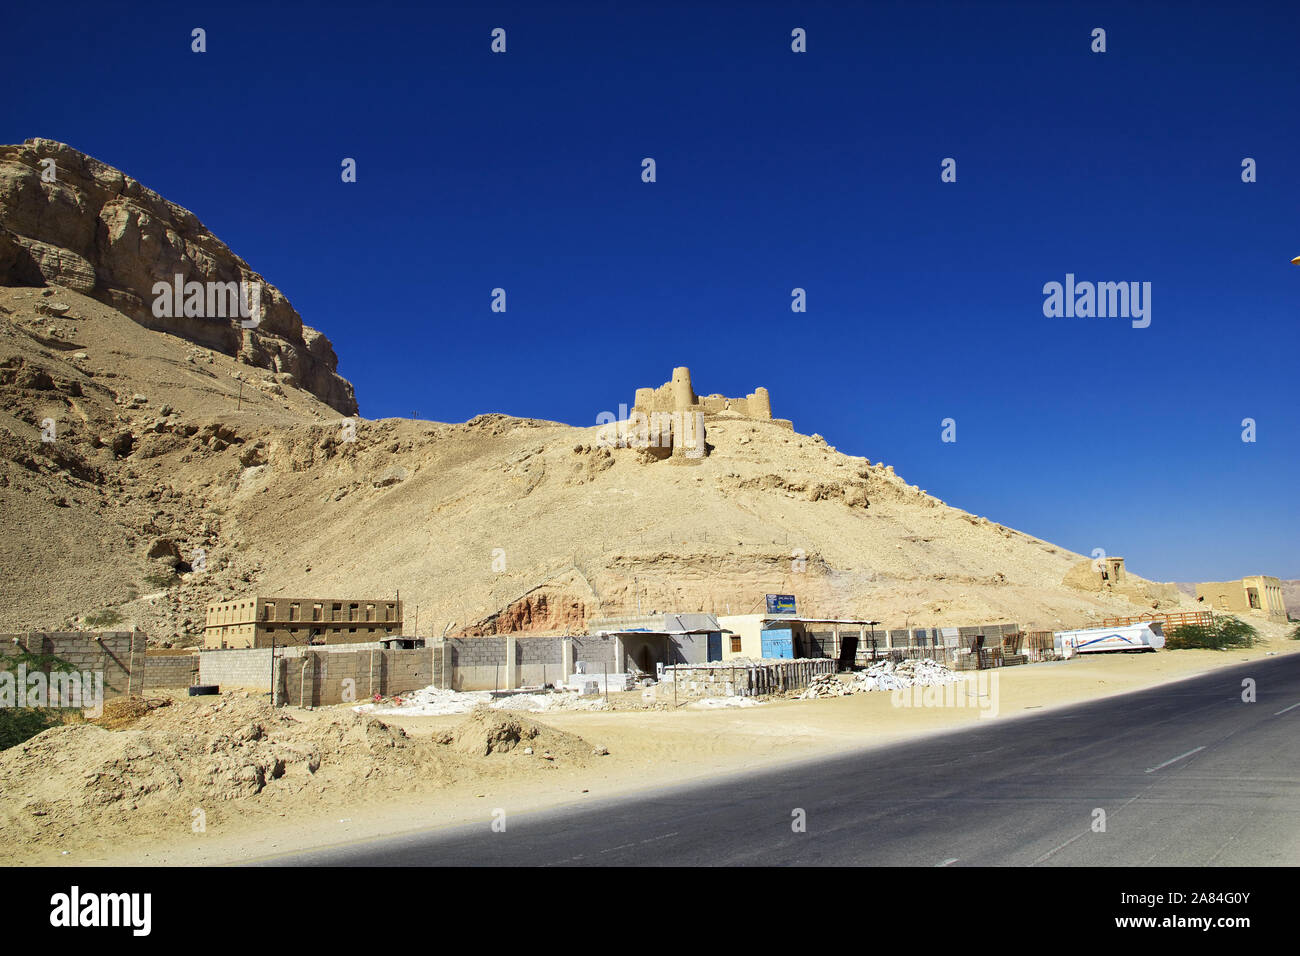 Wadi Hadhramaut / Yemen - 31 Dec 2012: The fortress in mountains in Wadi Hadhramaut, Yemen Stock Photo